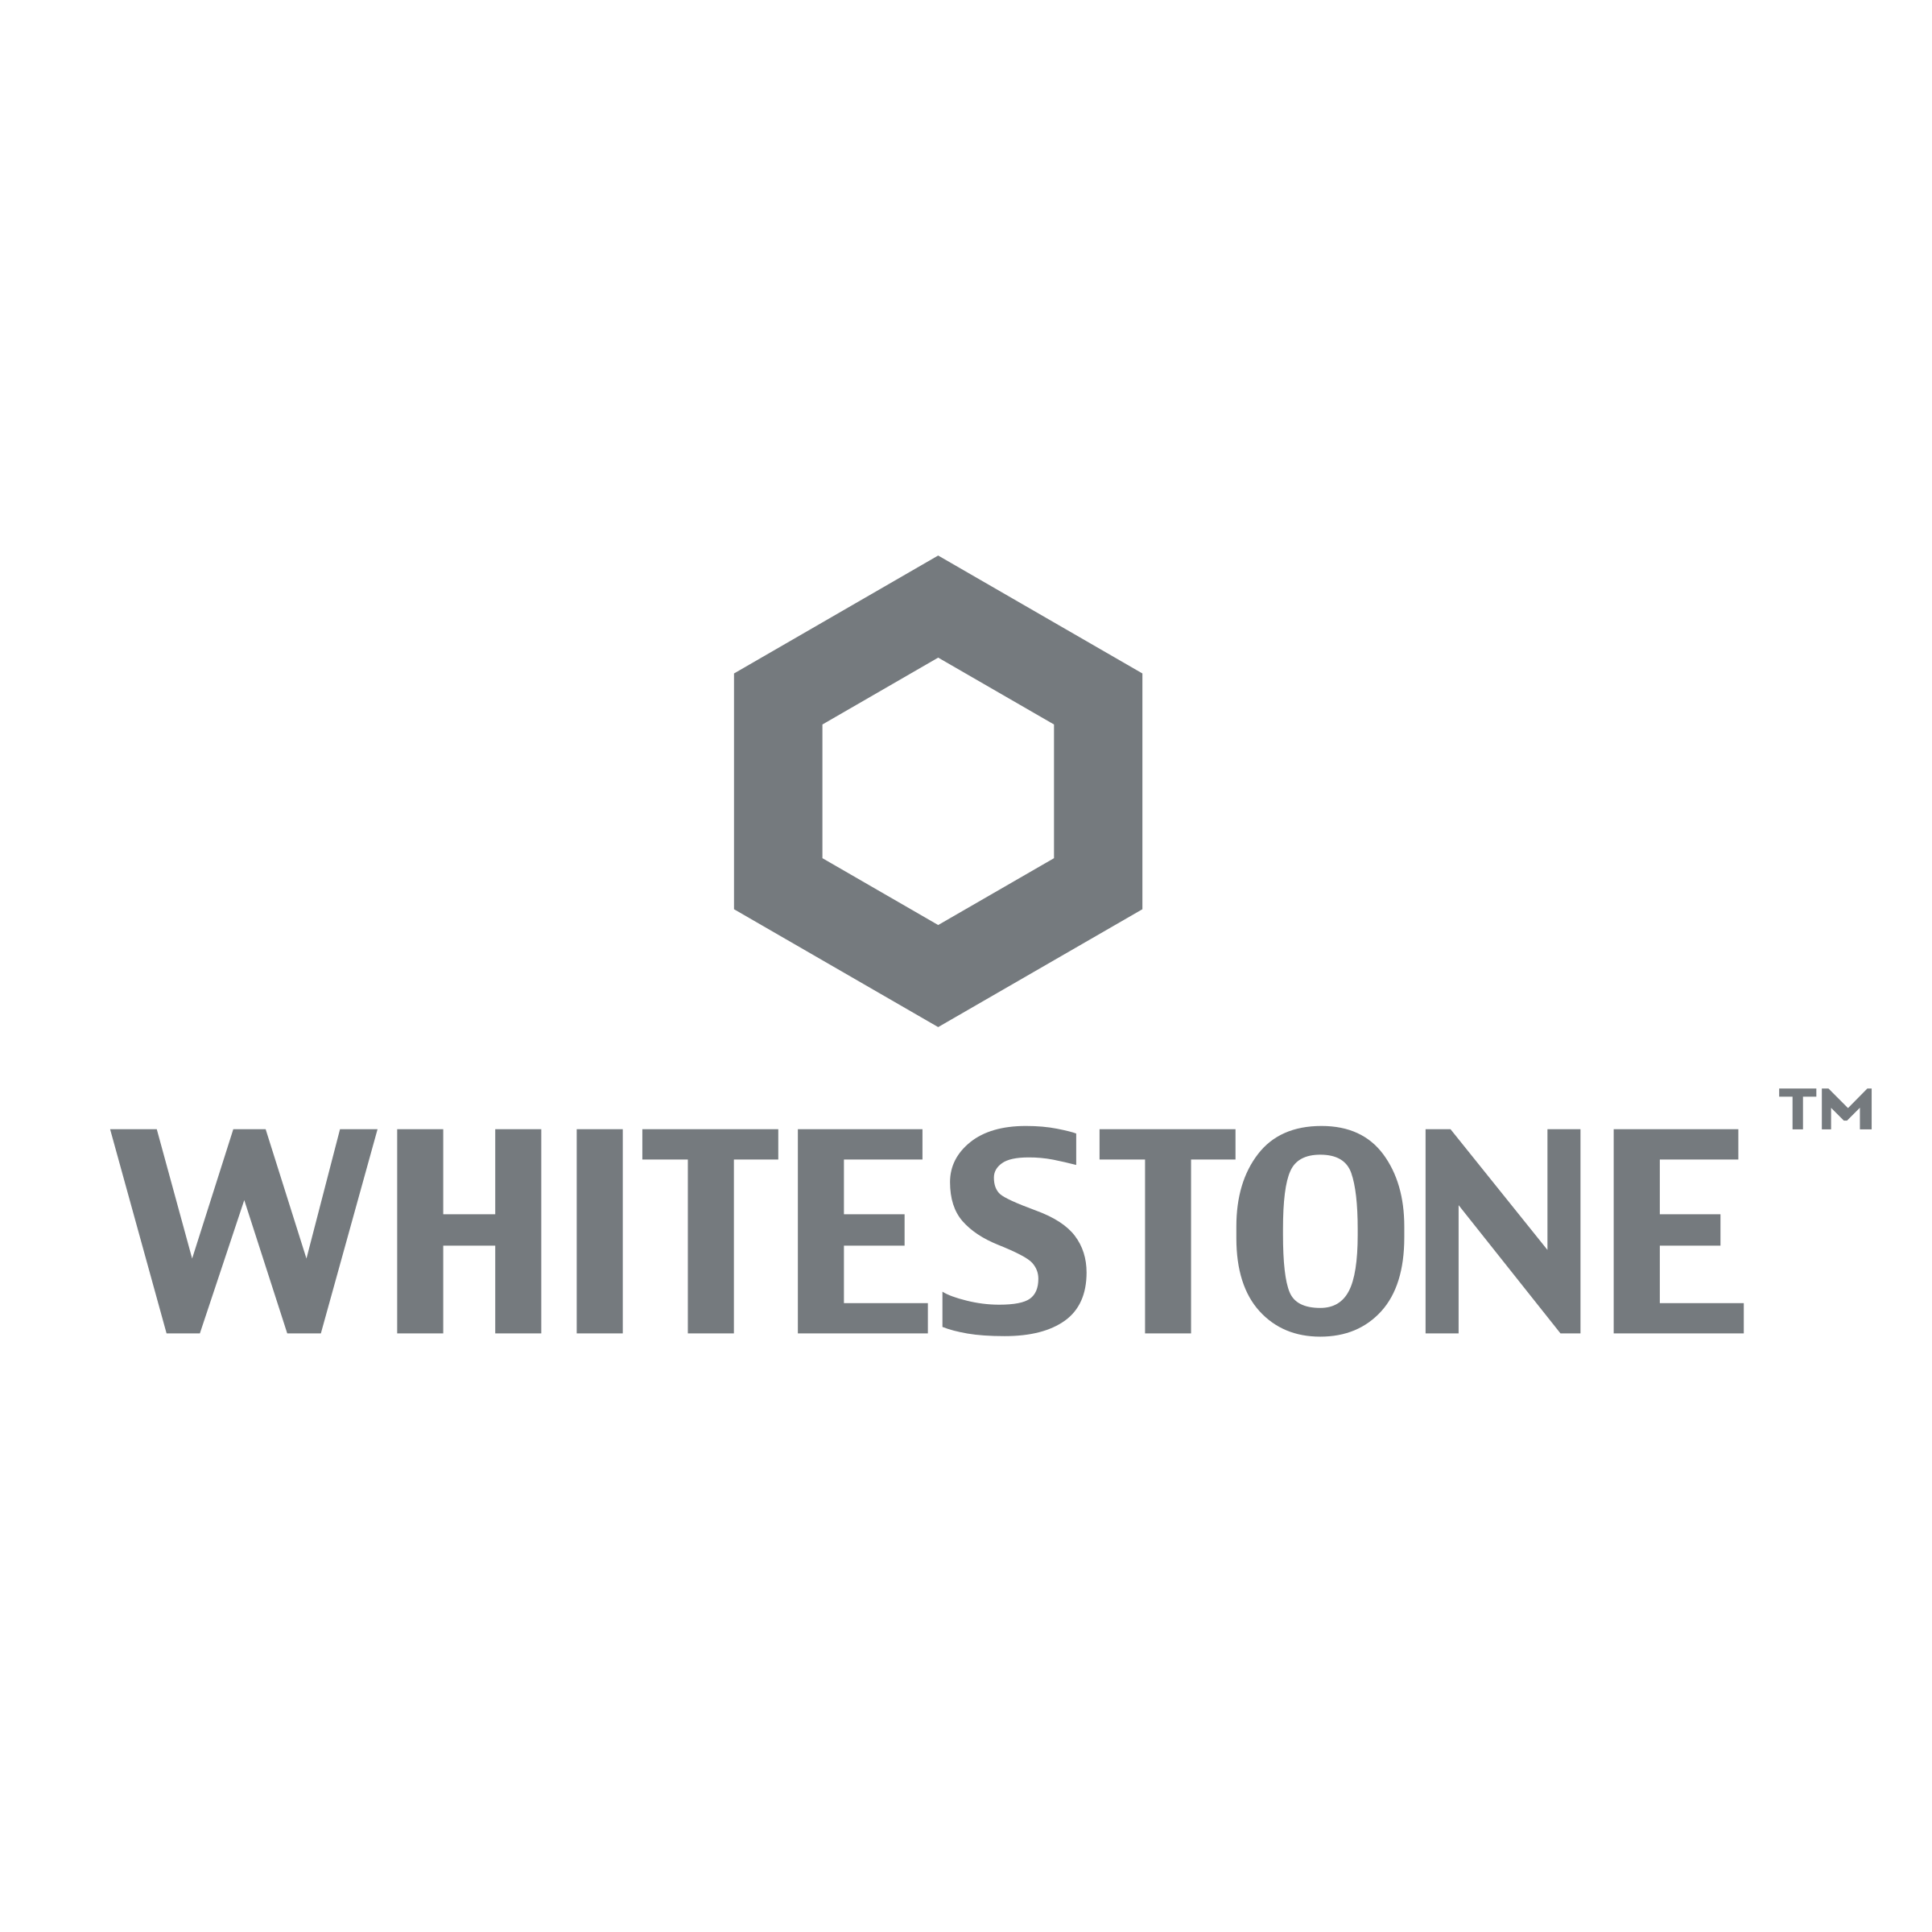 Whitestone Logo - WhiteStone Technology Pte Ltd Logo PNG Transparent & SVG Vector ...